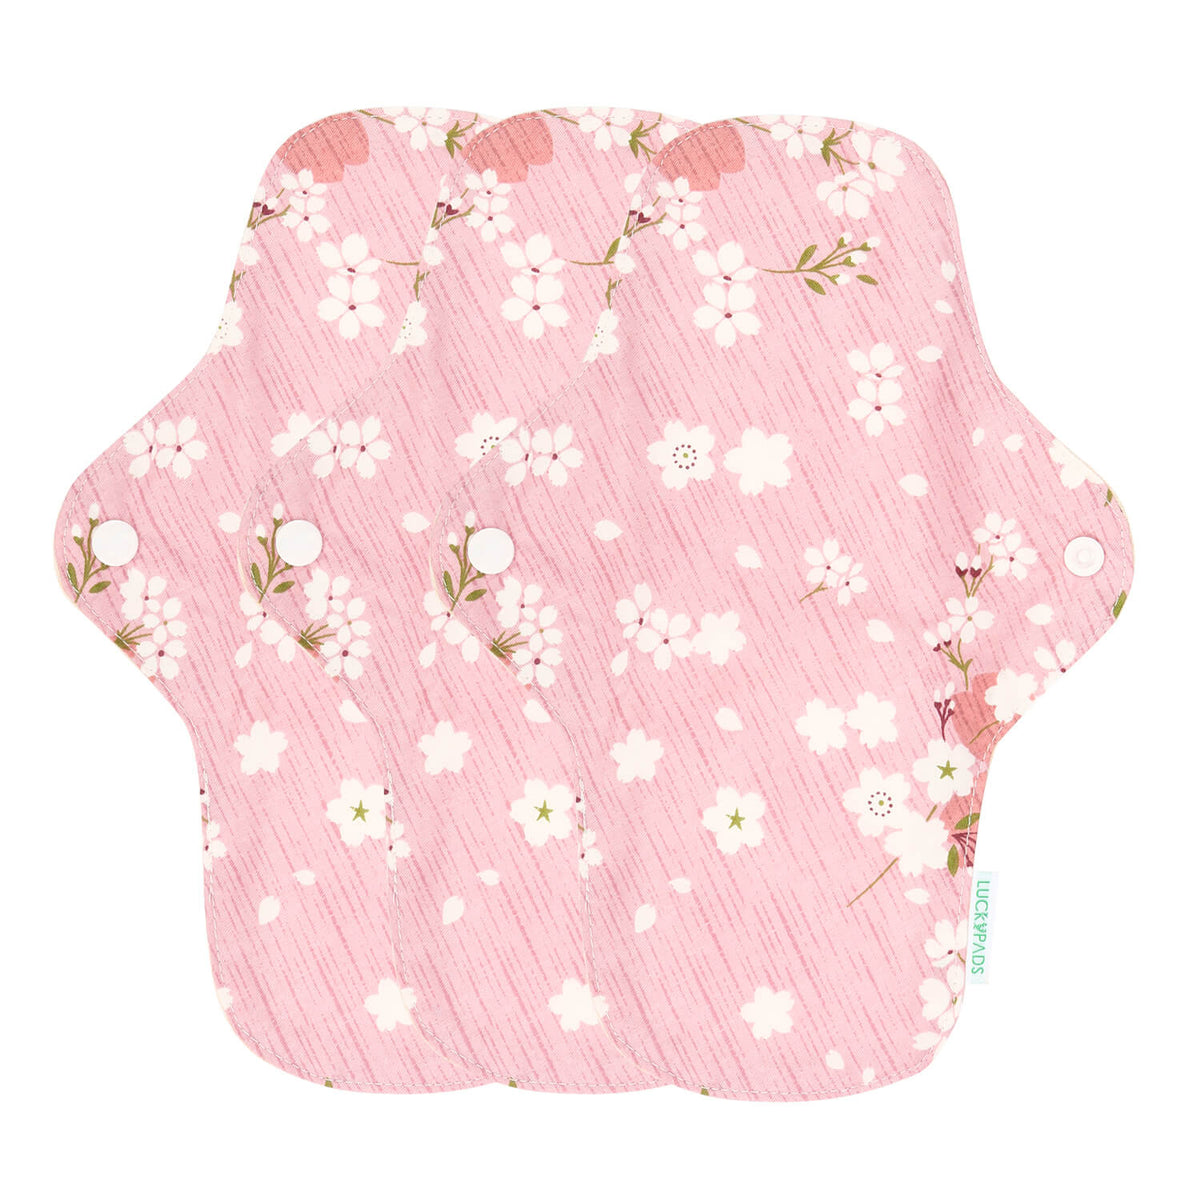 4 Piece Pink Reusable Menstrual Pads at Rs 475/pack